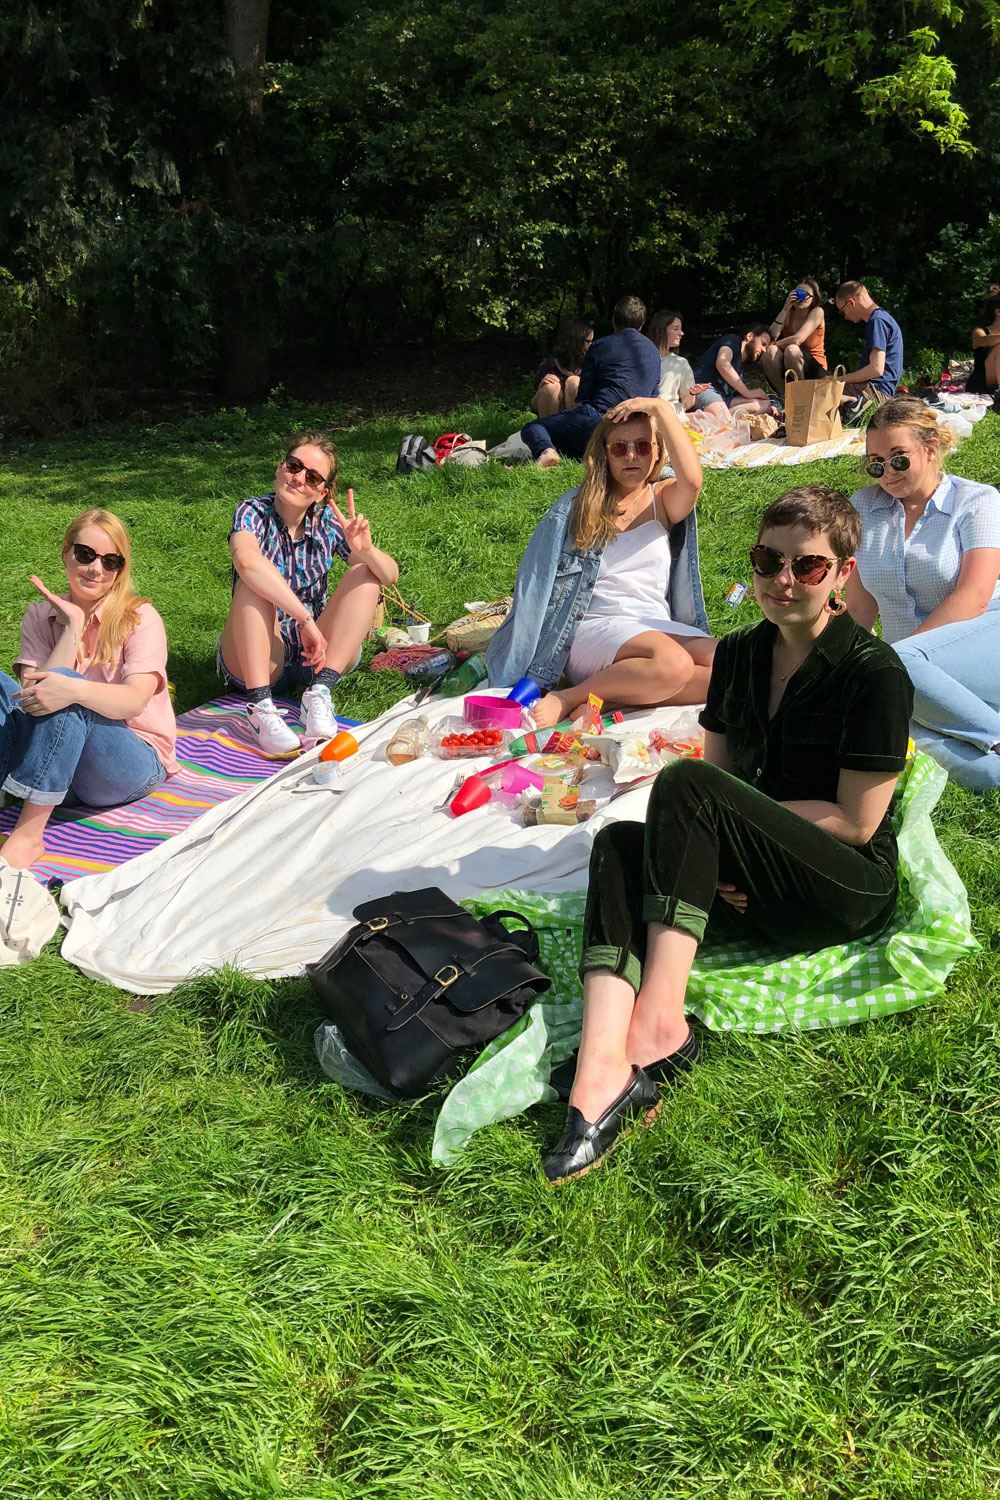 Six students enjoying a picnic in Paris France.